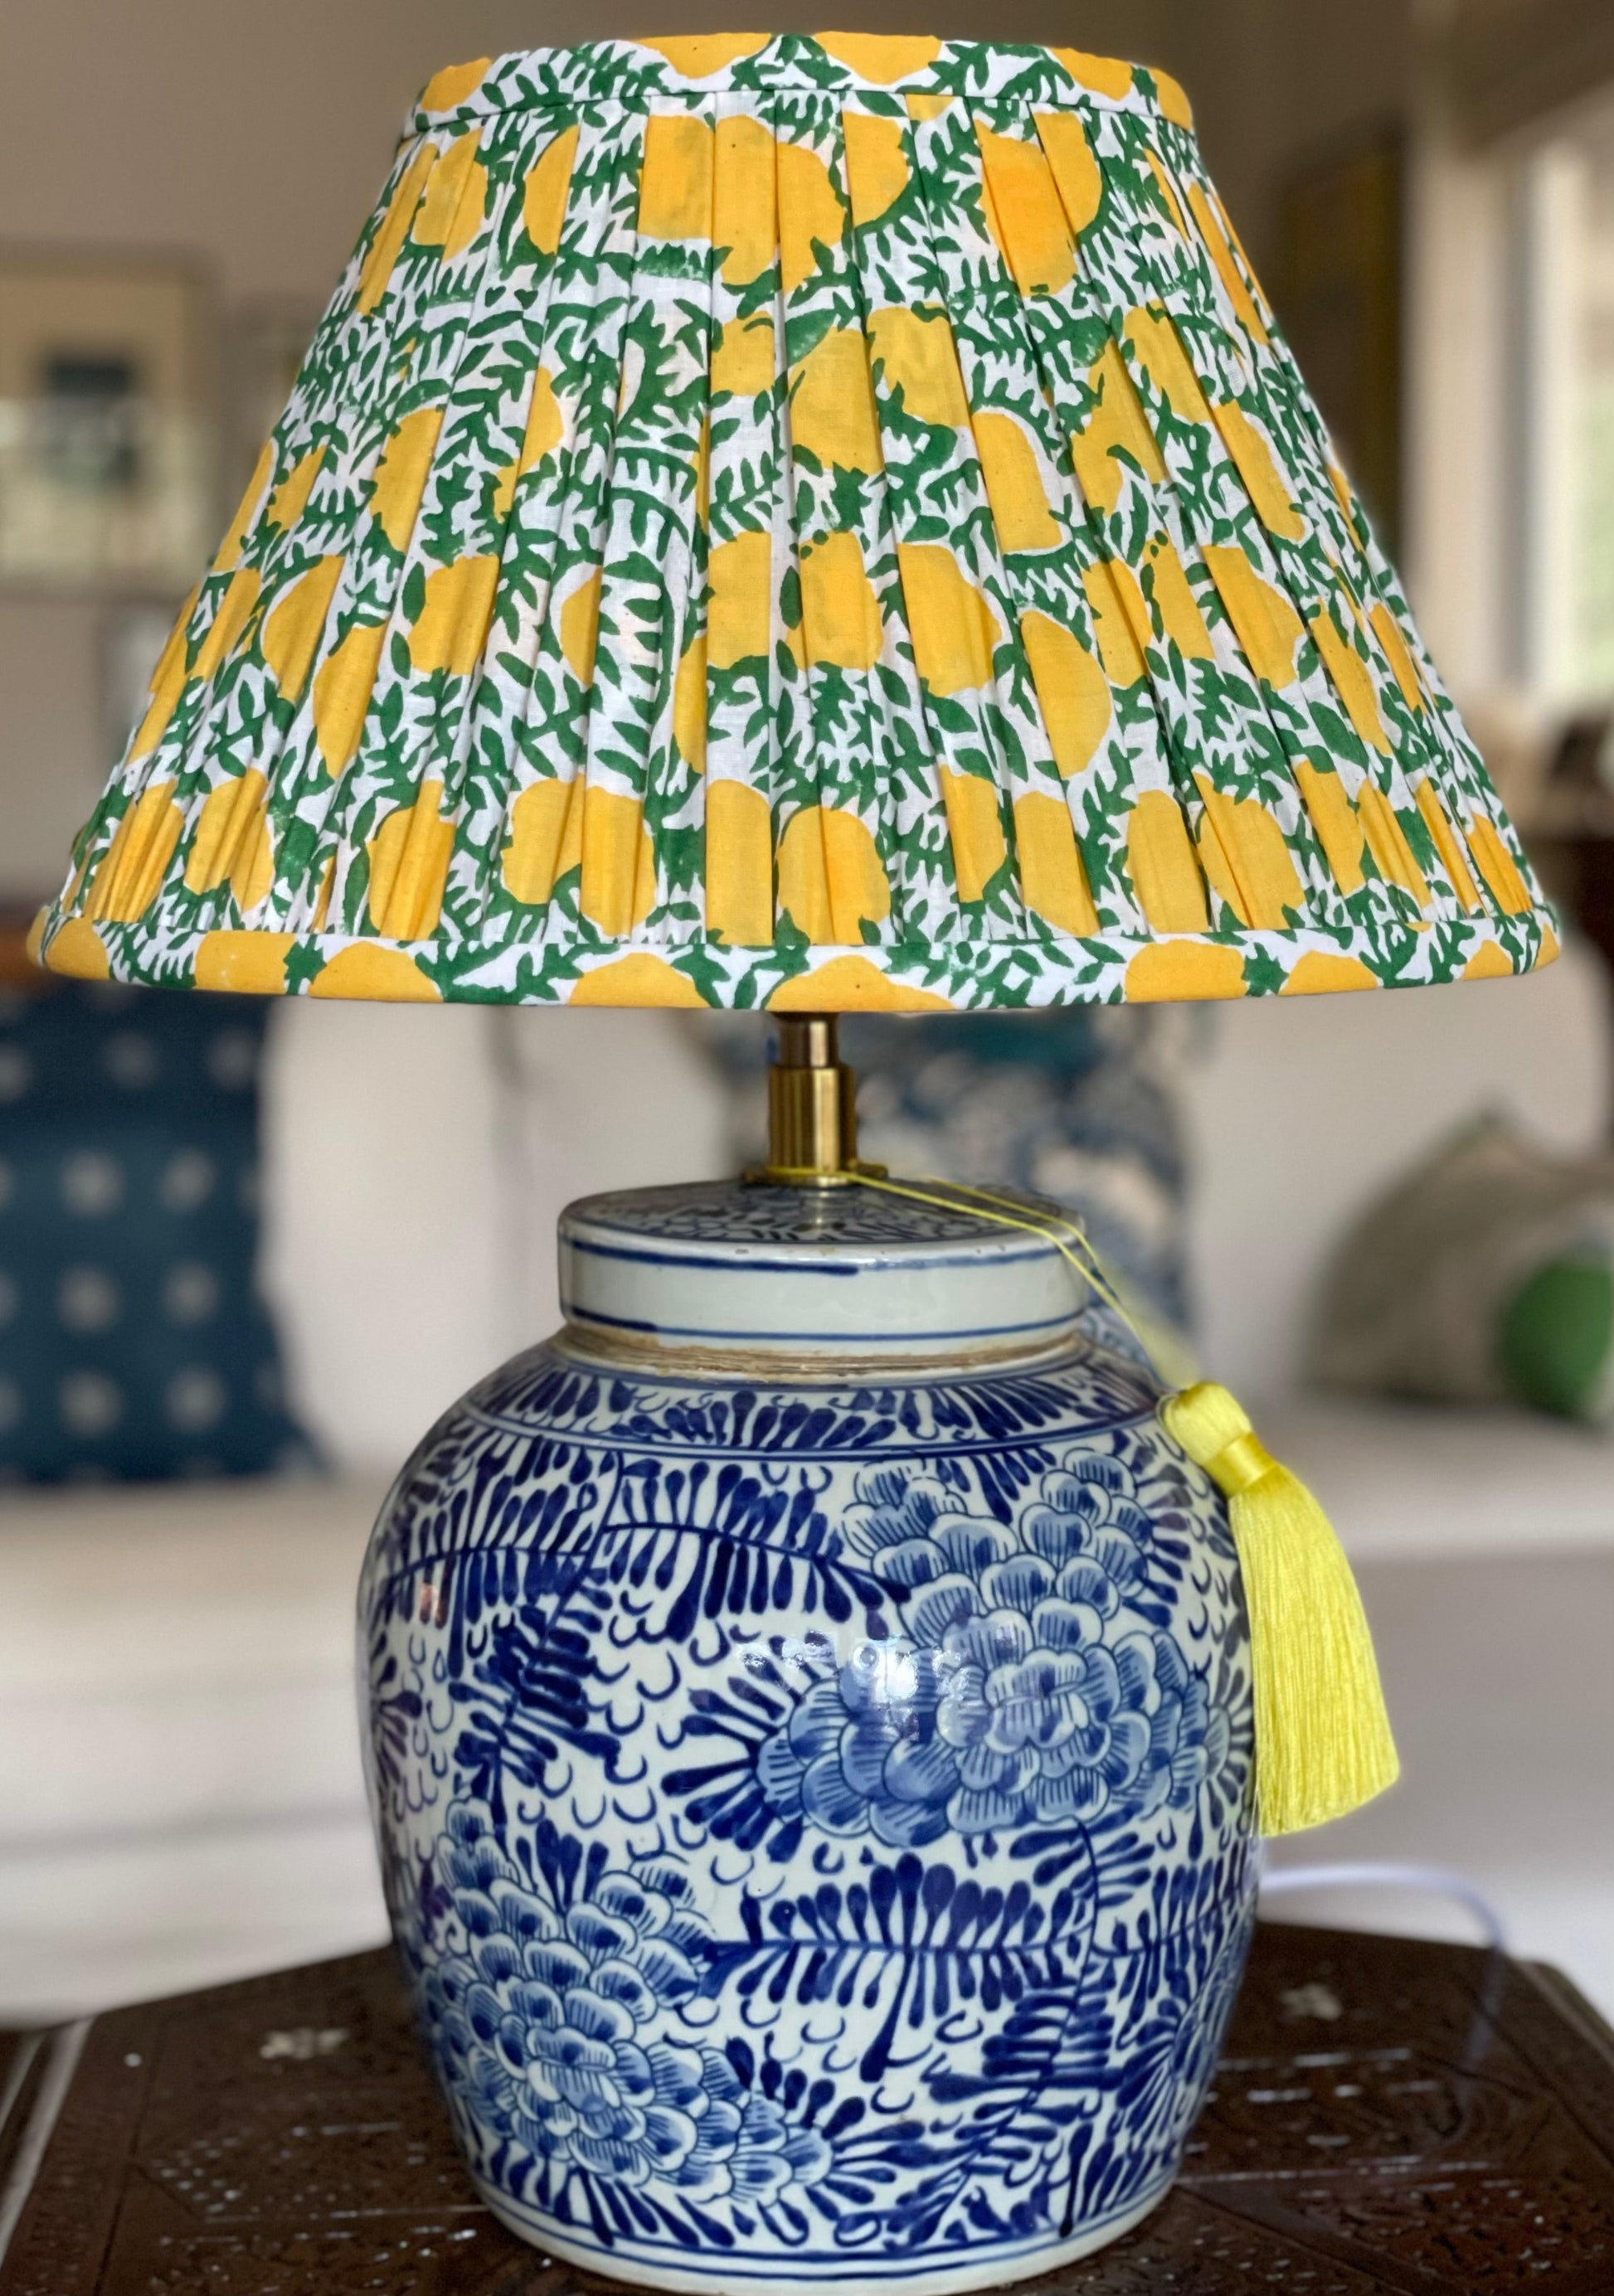 Lemon Grove Block-Print Cotton Gathered Lamp Shade with Evregreen base